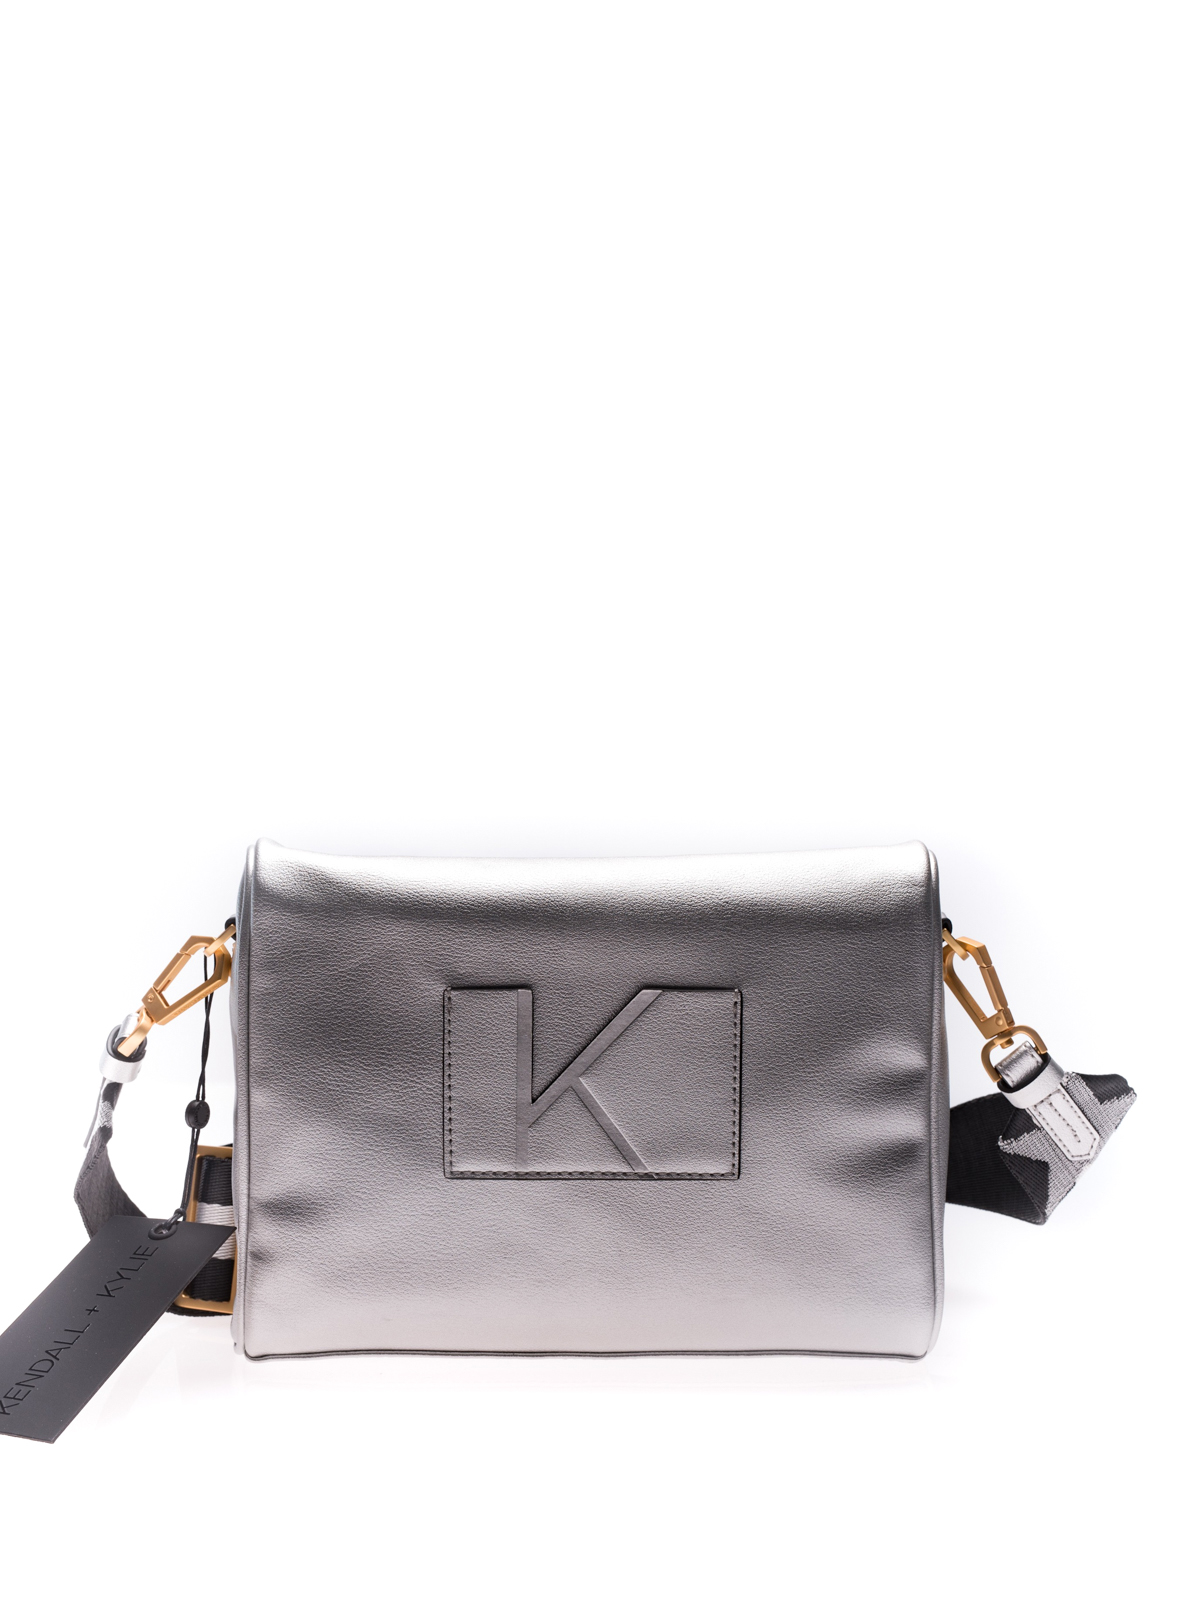 Kendall + Kylie Crossbody Bag